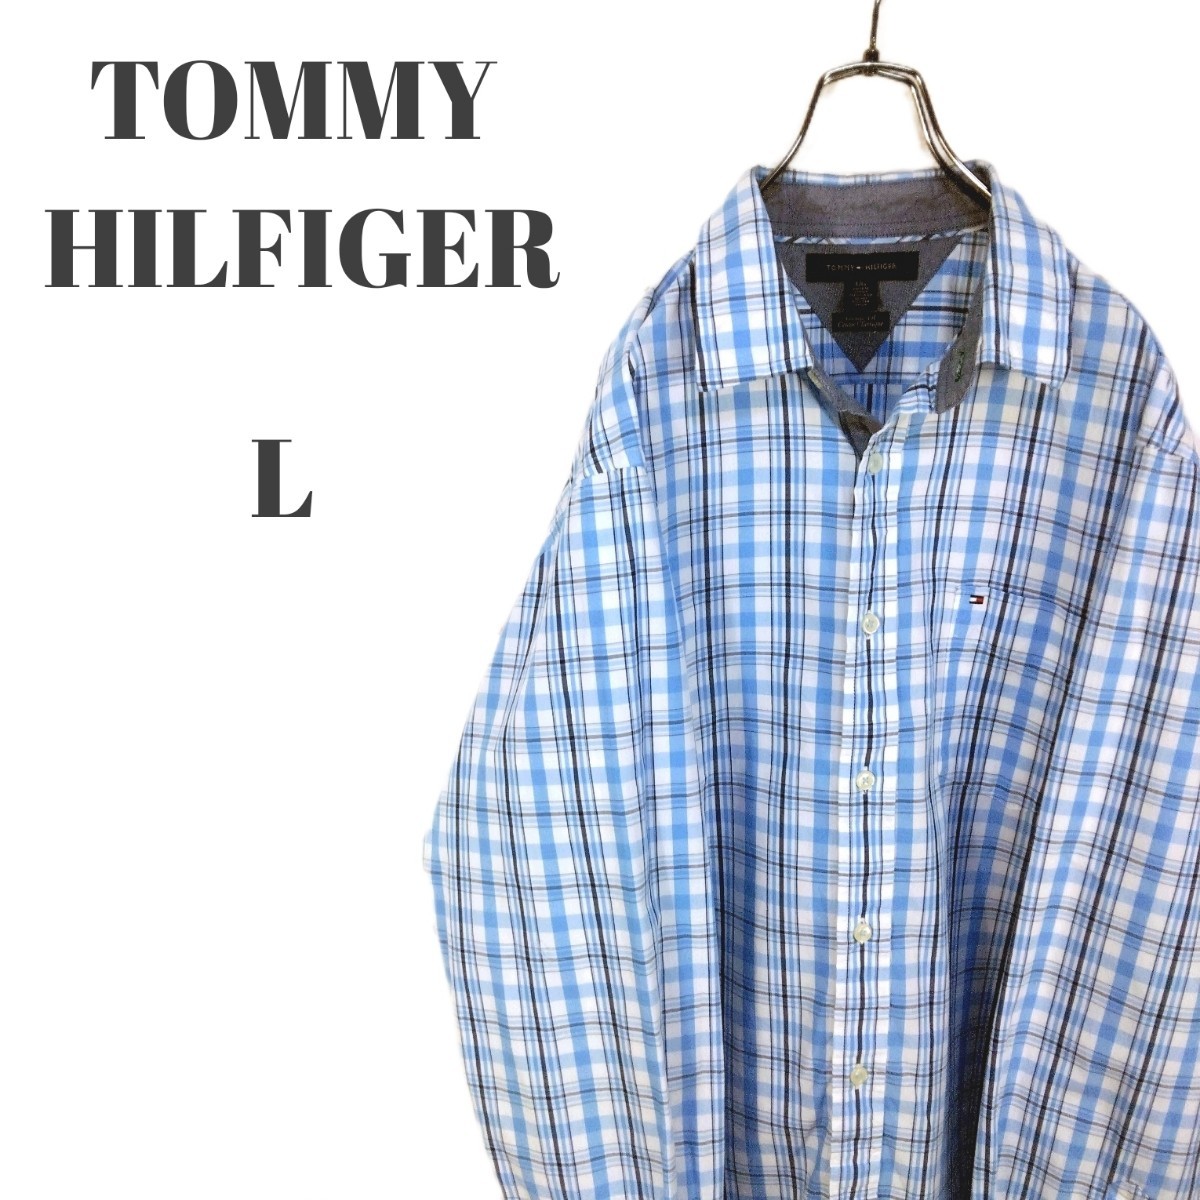 TOMMY HILFIGER トミーヒルフィガー 長袖シャツ カラーキーパー付き フラッグ刺繍 胸ポケット ライトブルー 他 チェック メンズ Lサイズ_画像1